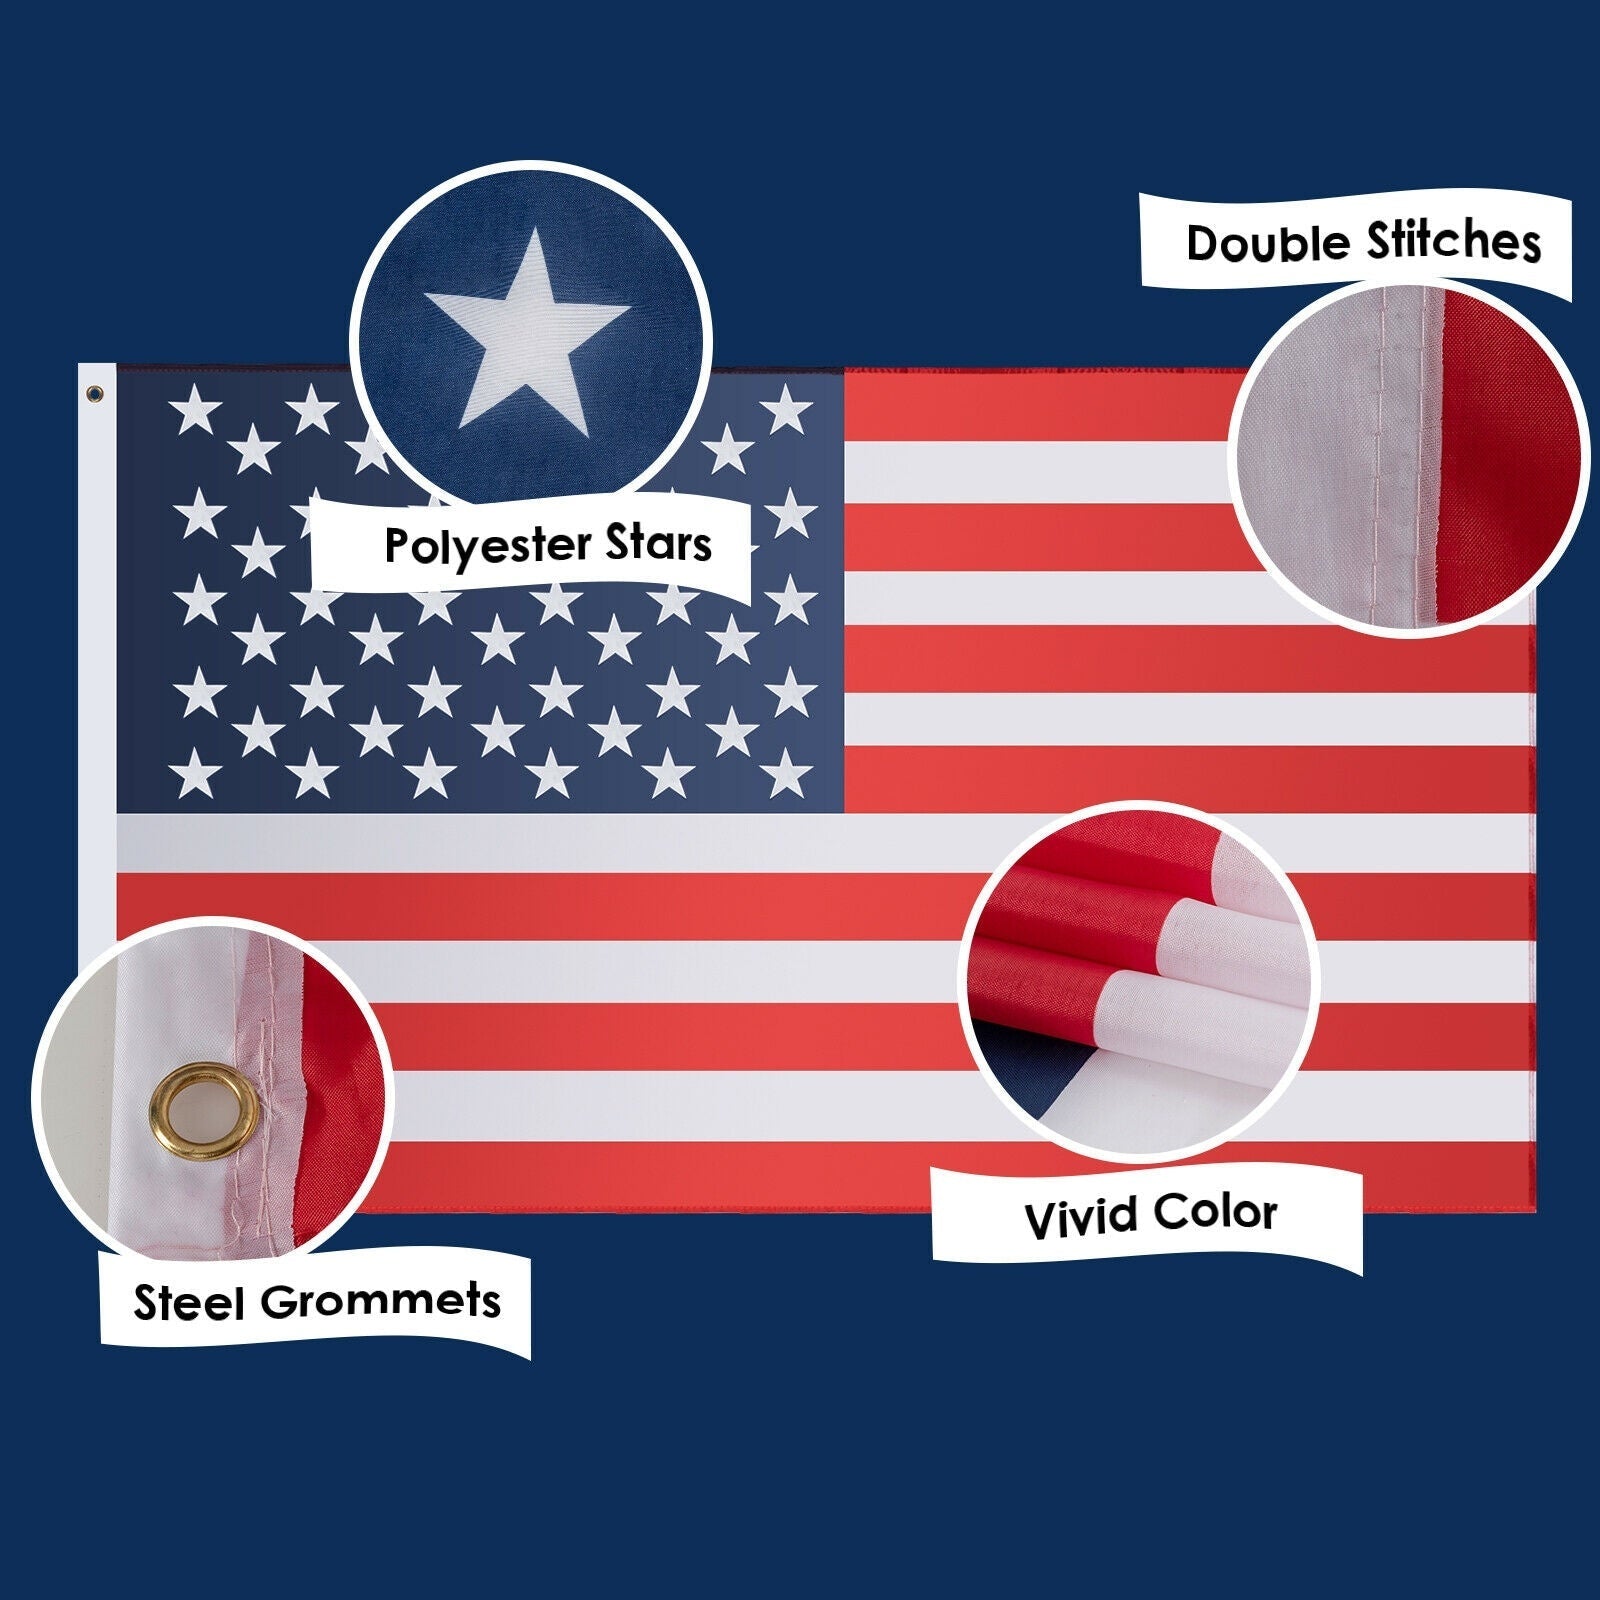 3' x 5' US American Printed Flag Moorescarts